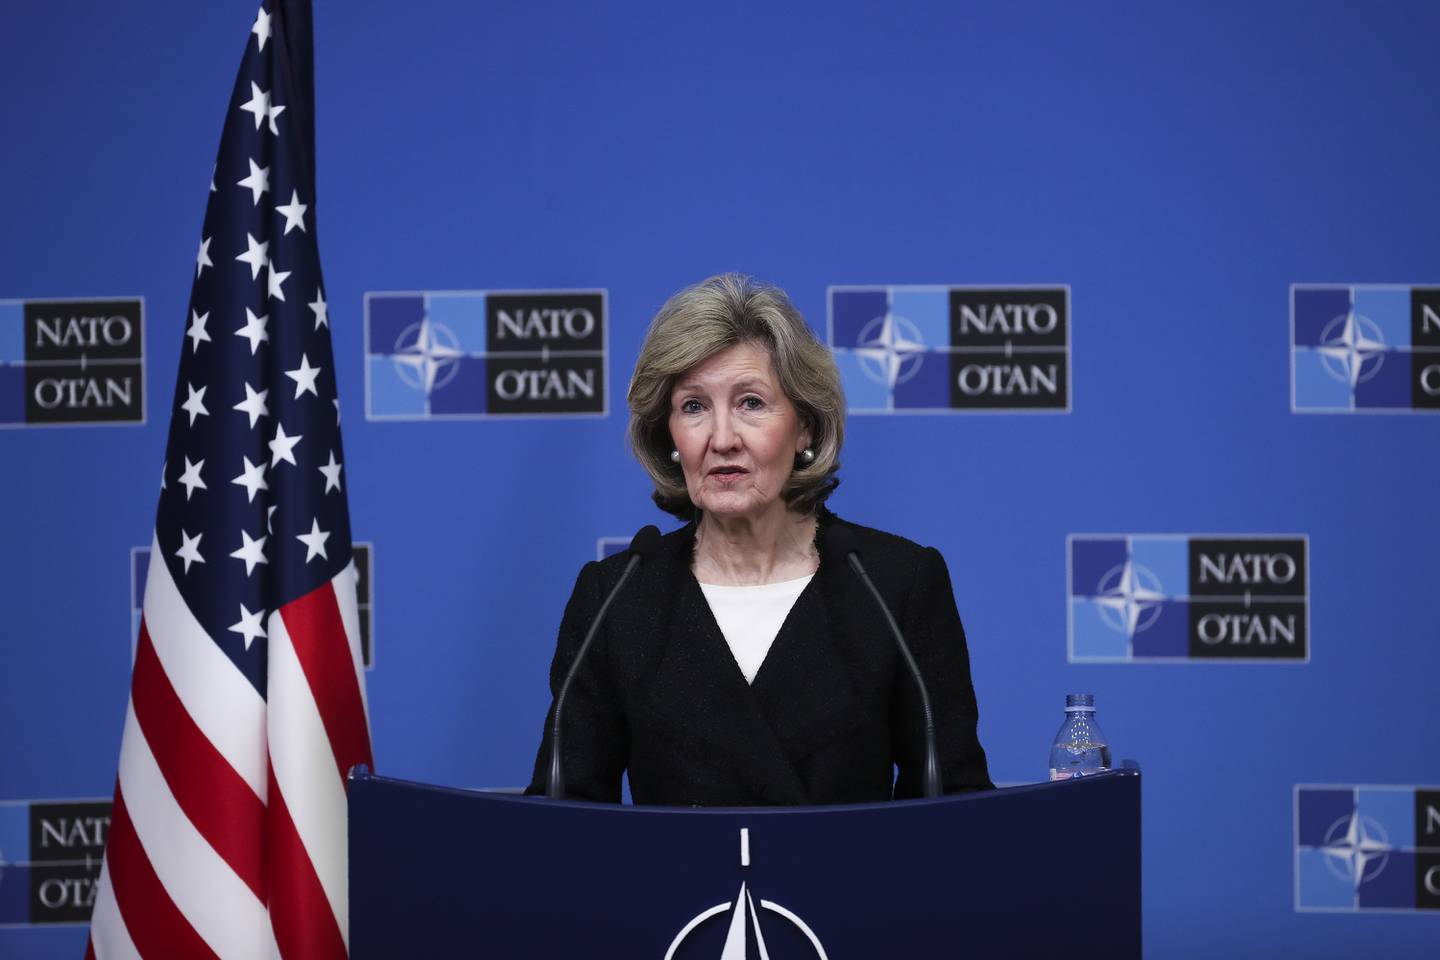 U.S. Ambassador to NATO Kay Bailey Hutchison